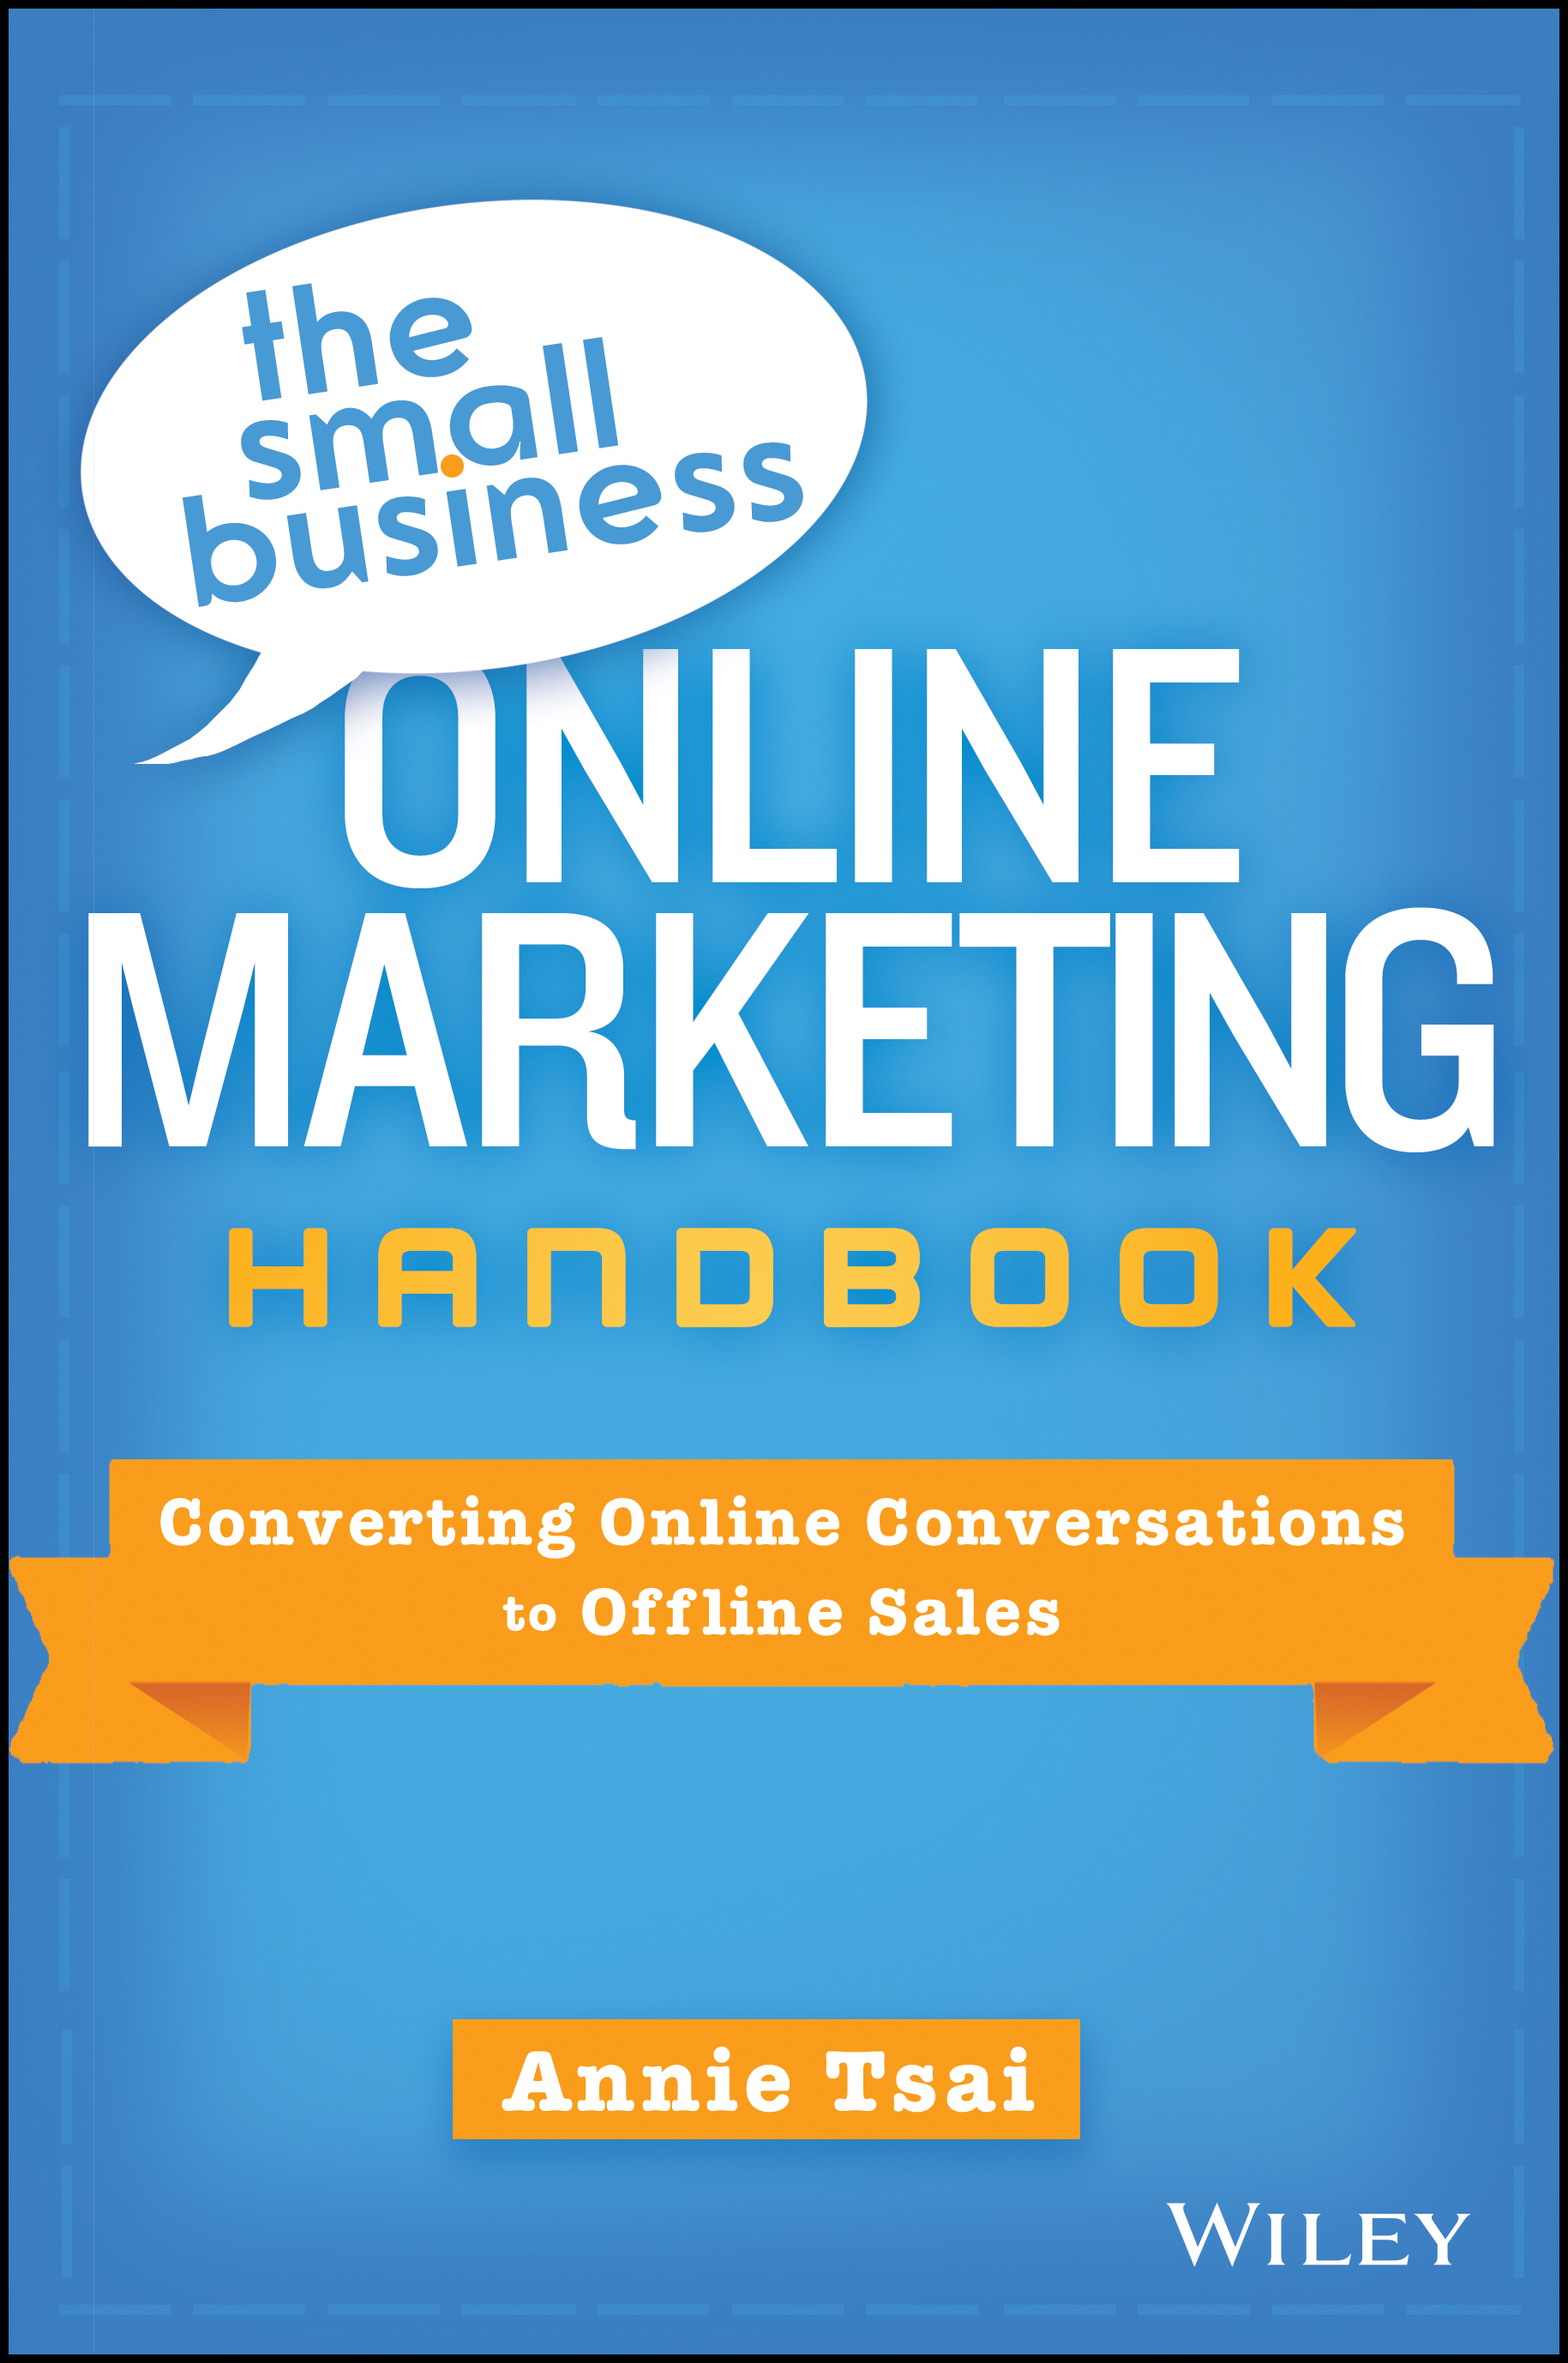 The-Small-Business-Online-Marketing-Handbook--Converting-Online-Conversations-to-Offline-Sales